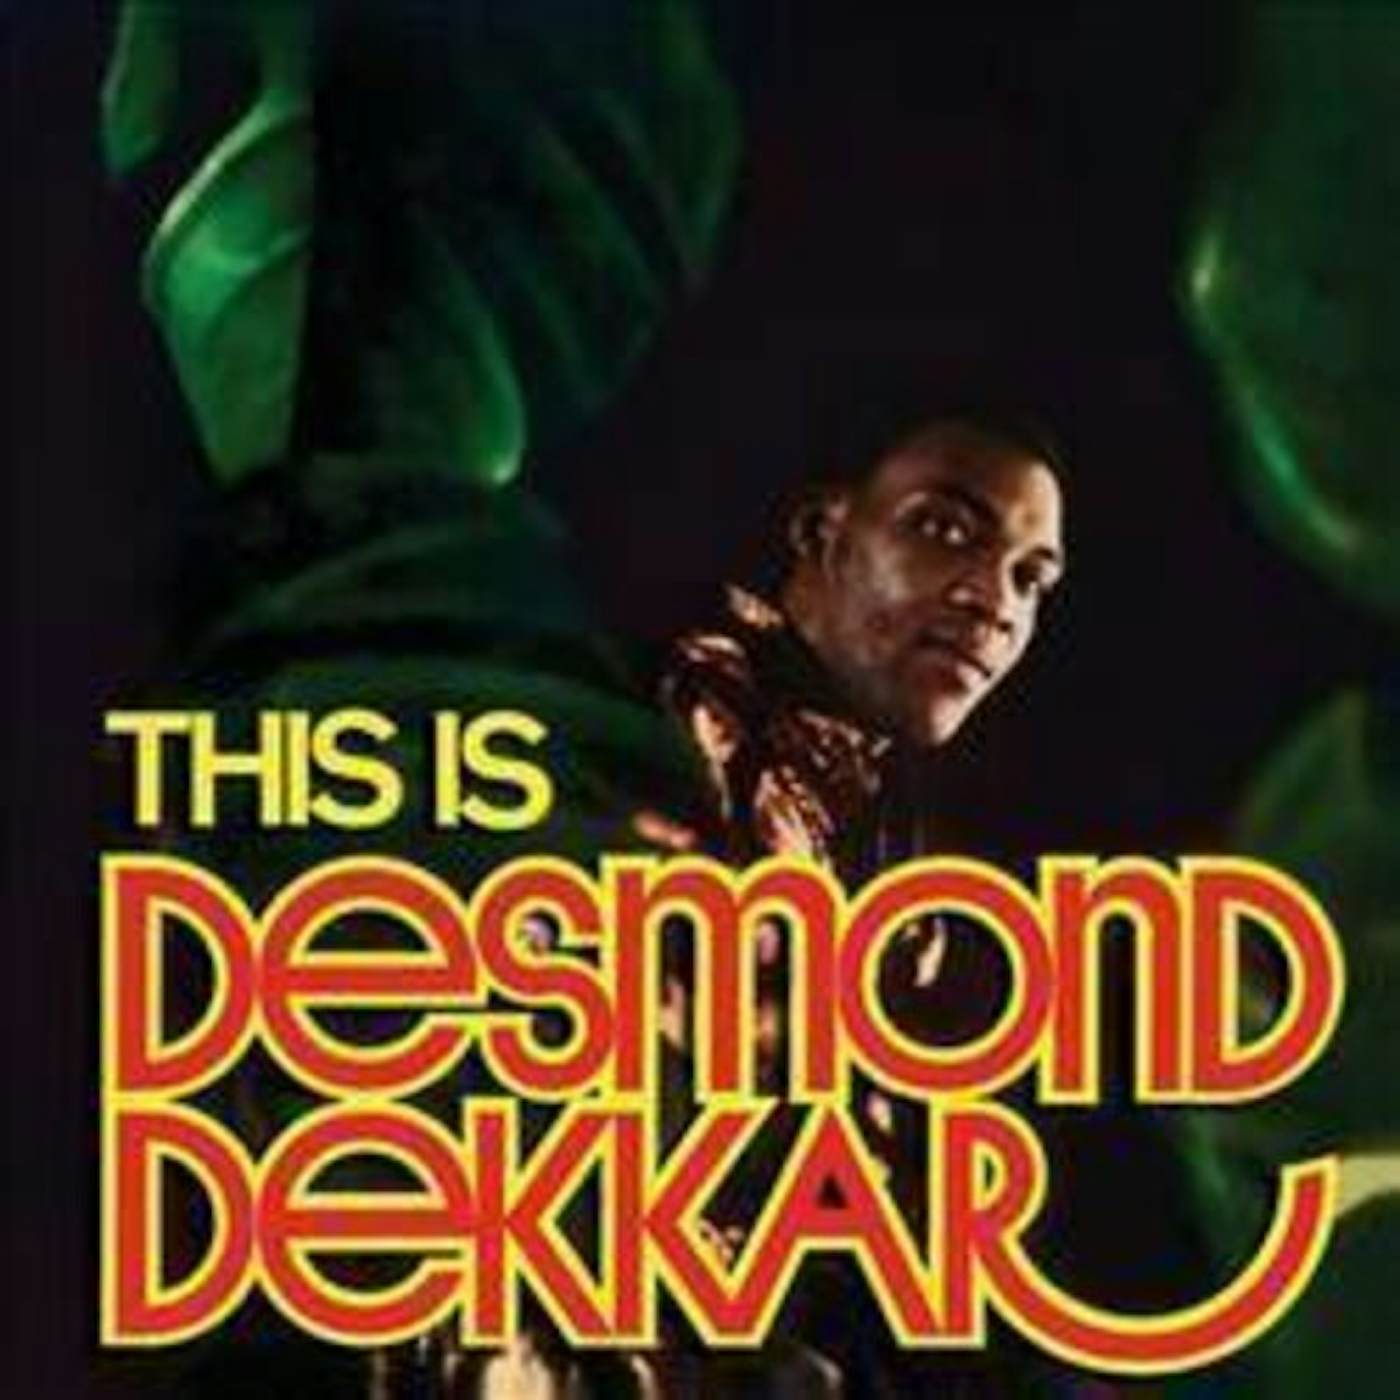 Desmond Dekker & The Aces This Is Desmond Dekkar Vinyl Record